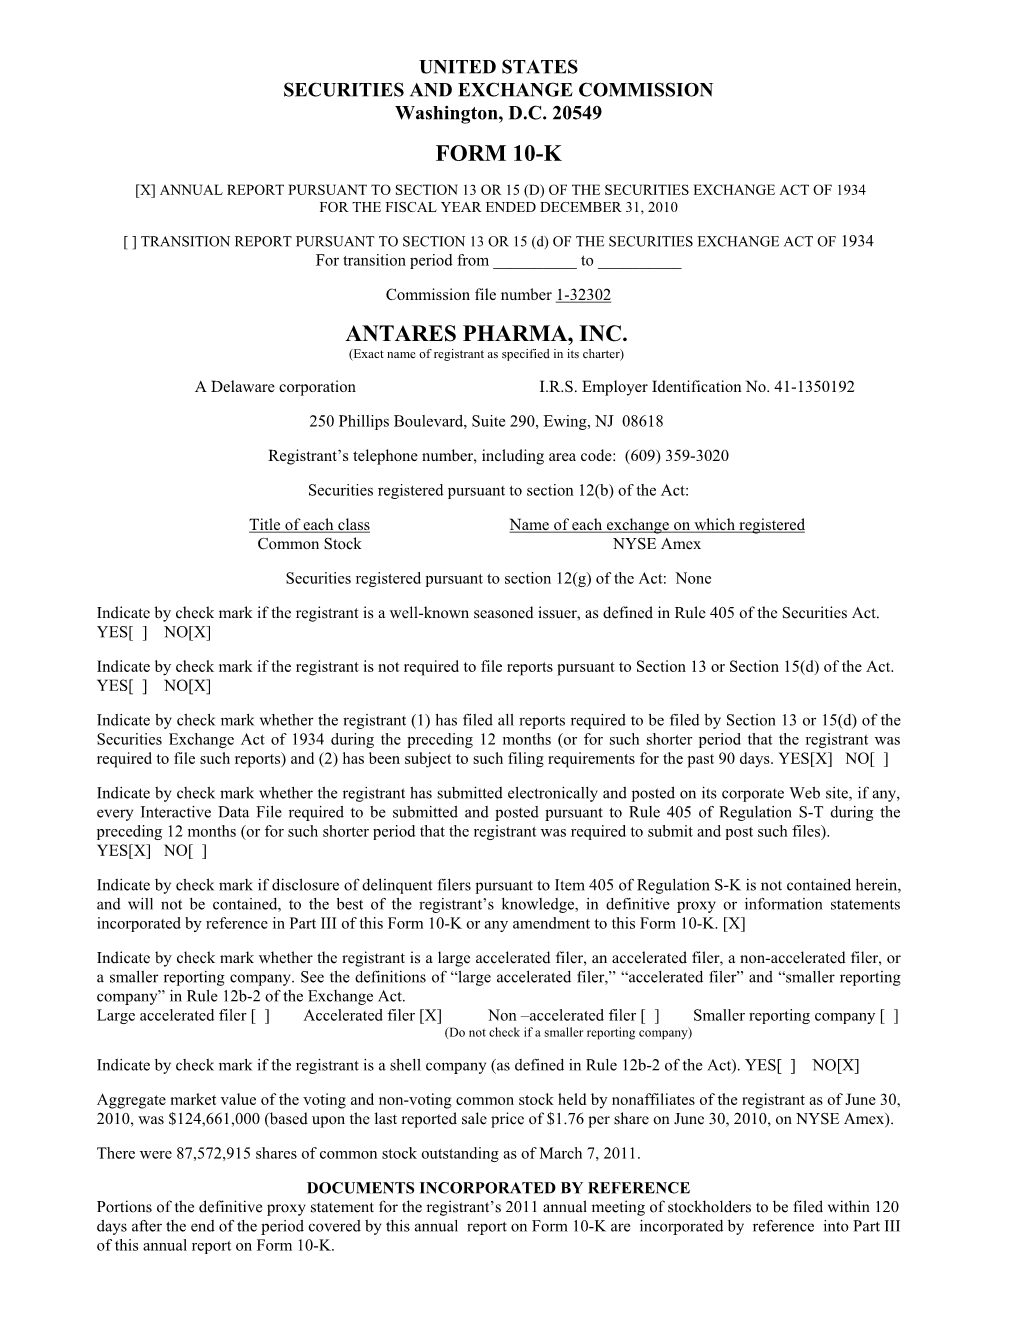 Form 10-K Antares Pharma, Inc